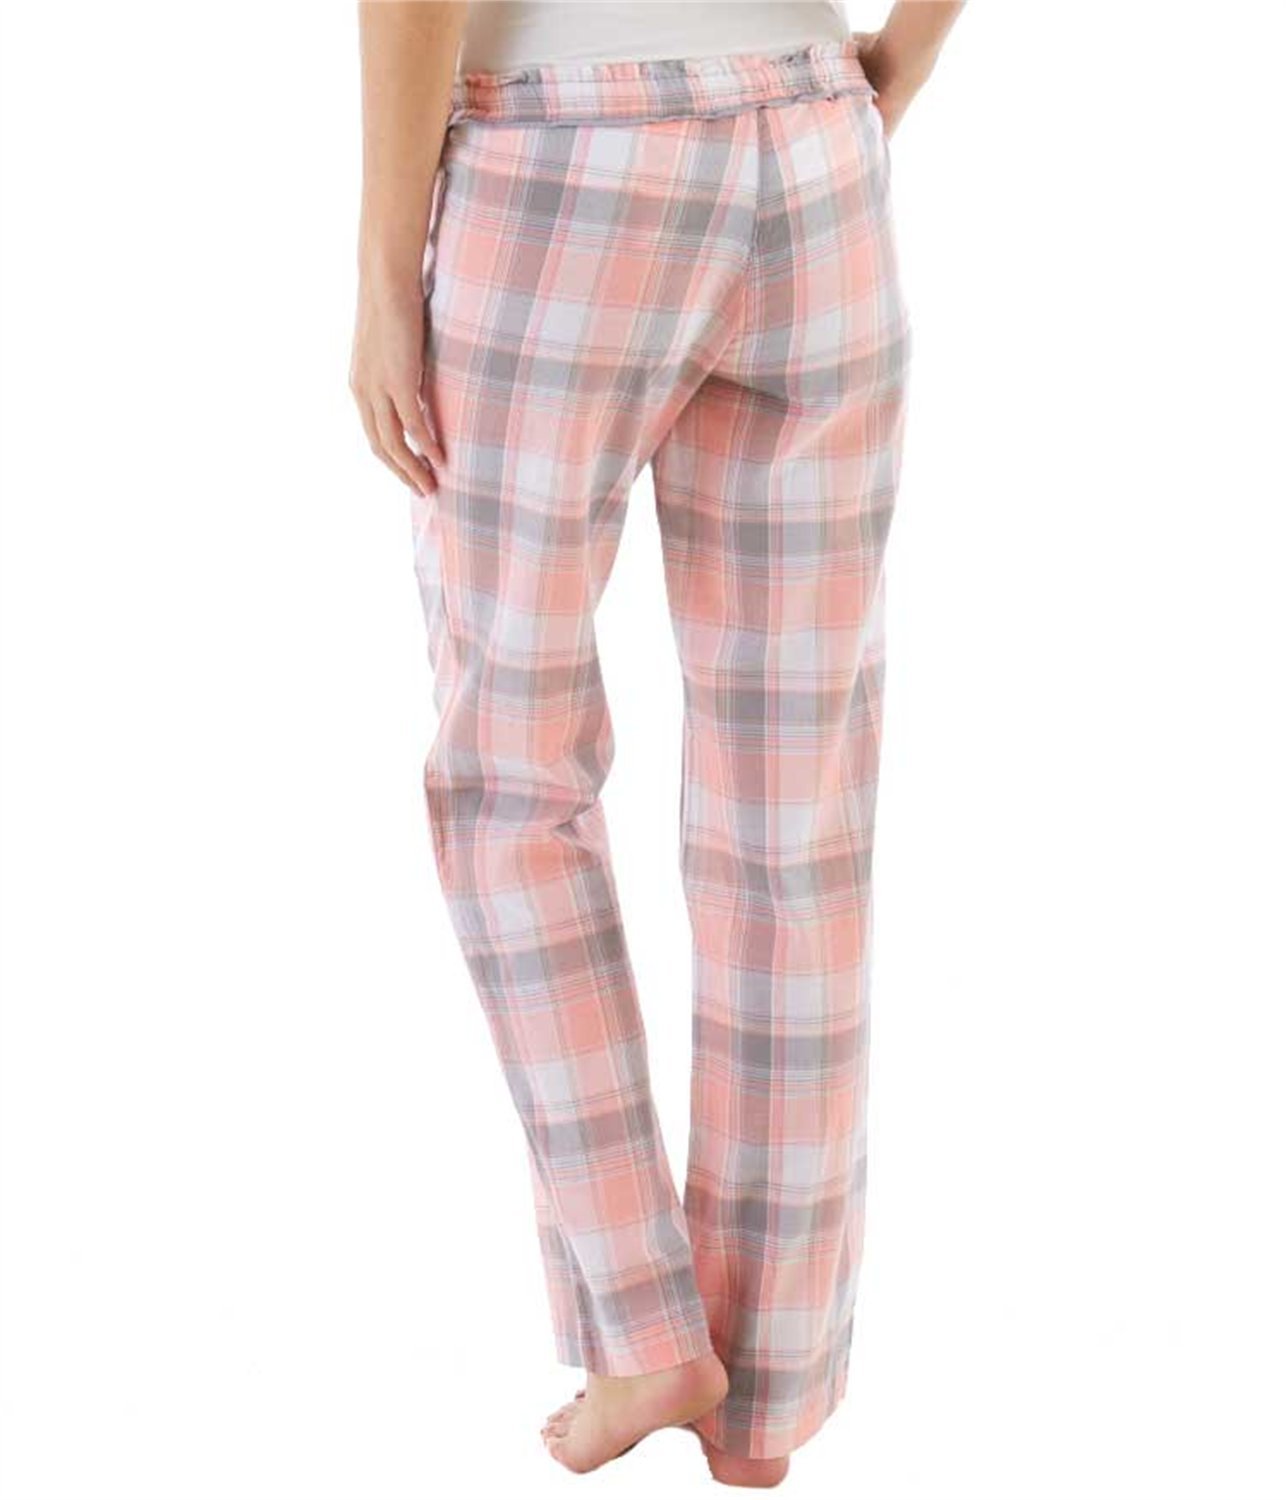 Camaieu mintás pizsama nadrág 2015 fotója